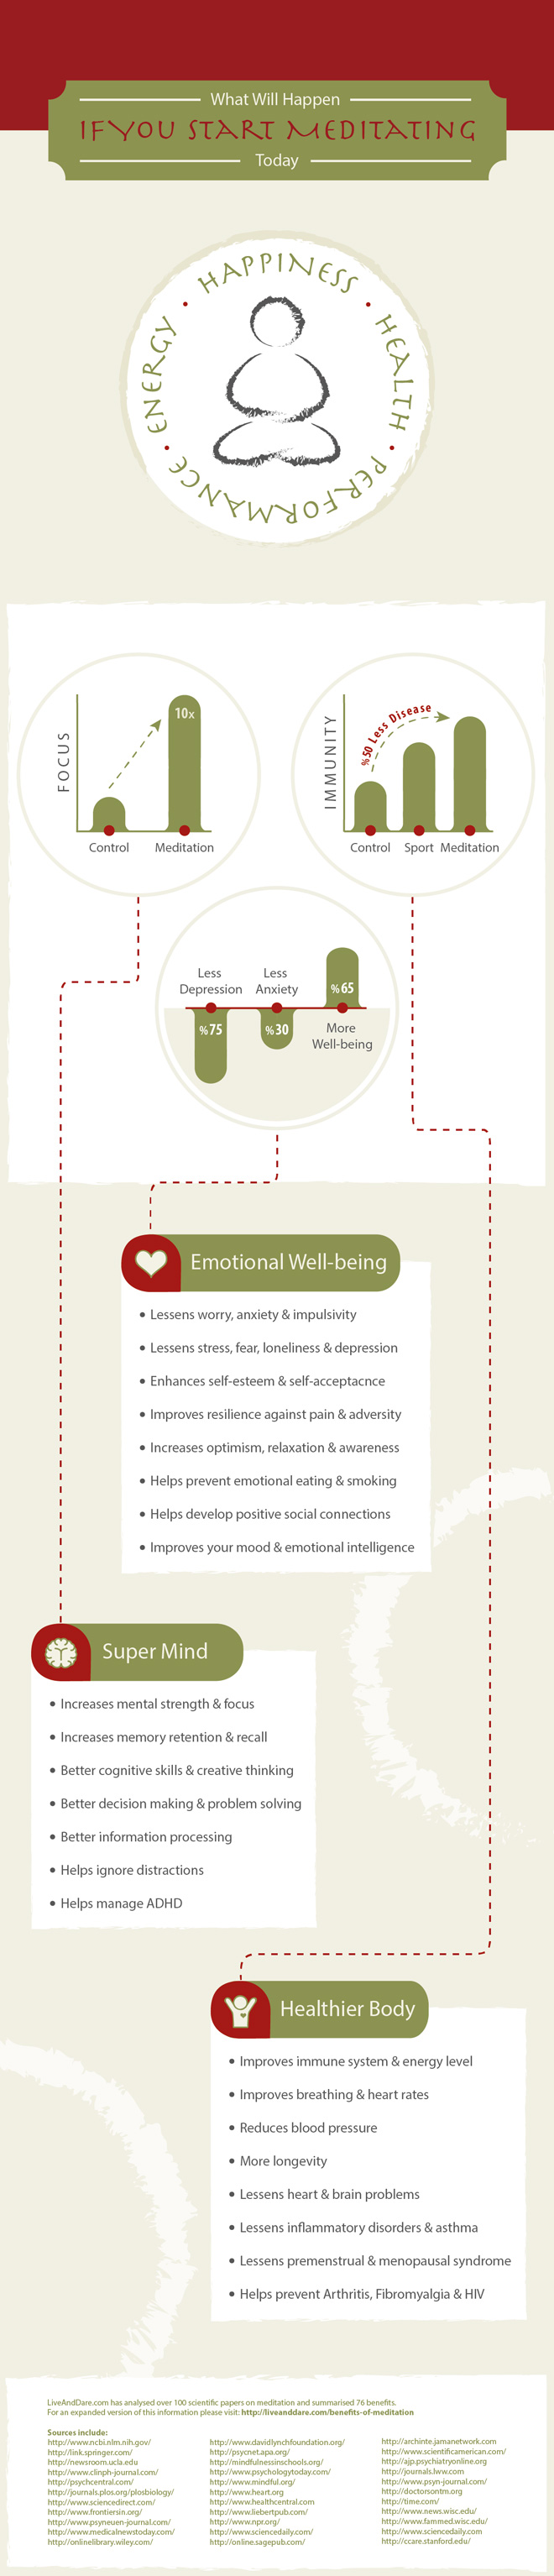 Benefits of Meditation Infographic